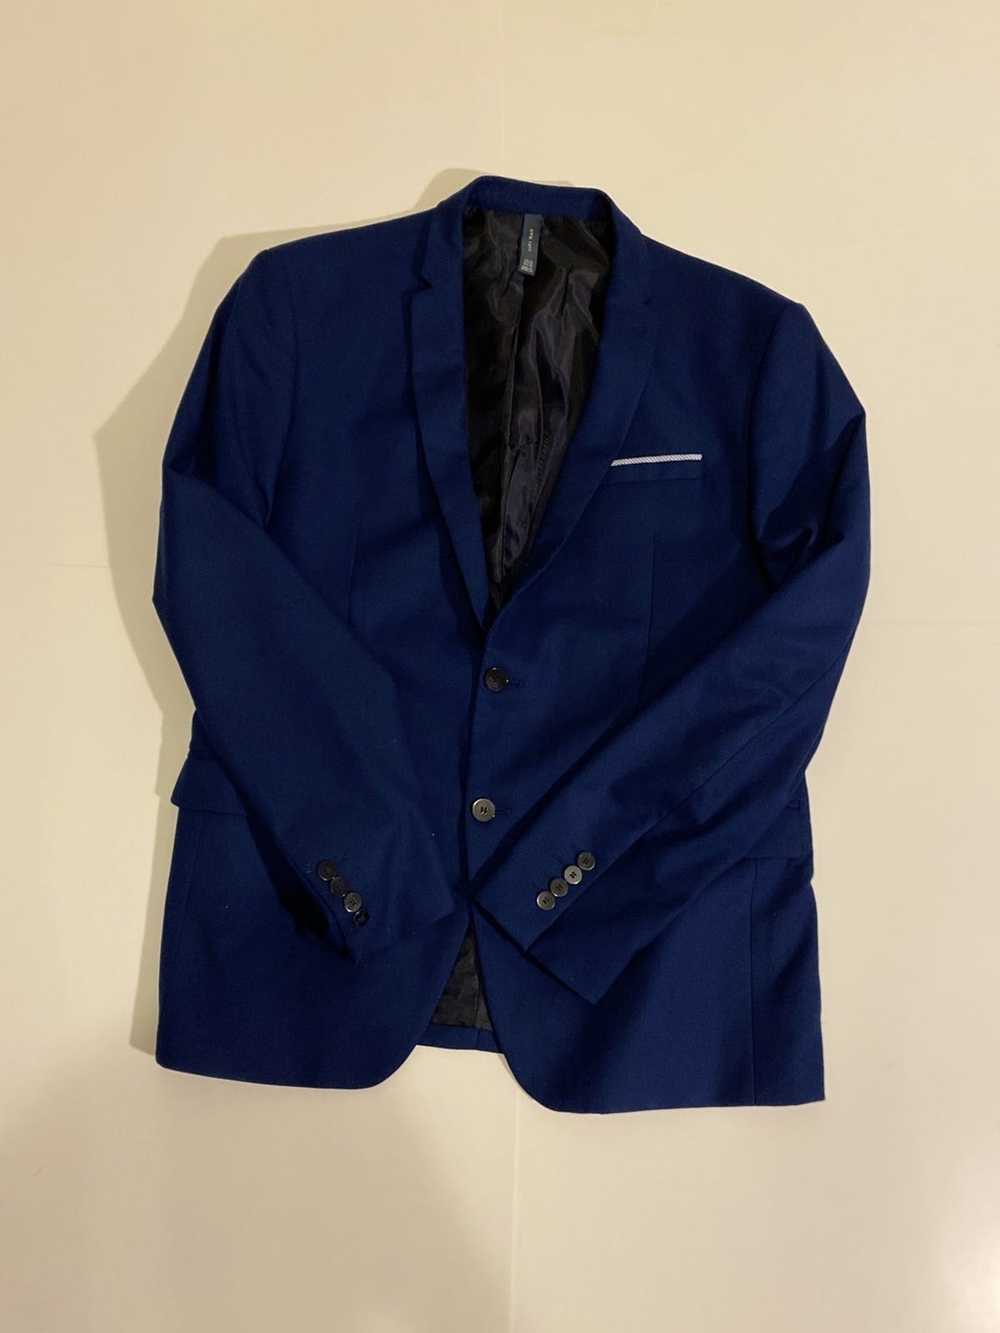 Zara Zara cobalt navy suit jacket blazer size 44 - image 1